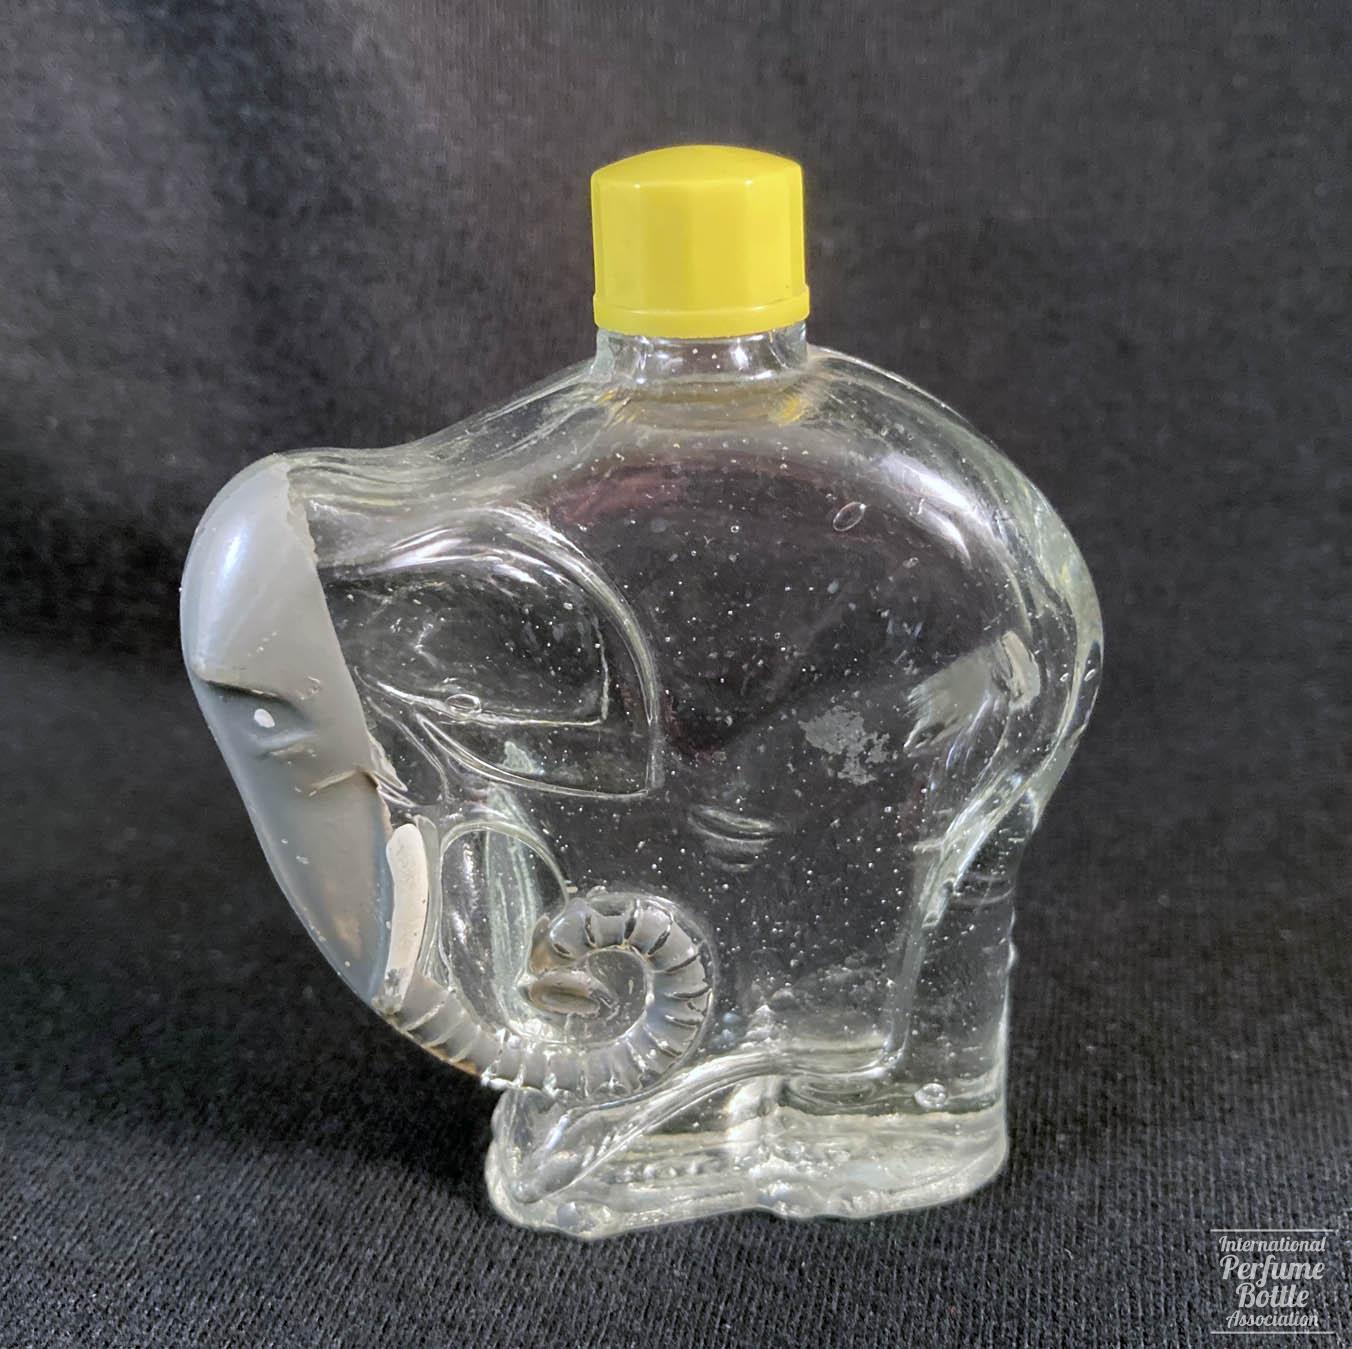 Elephant Perfume by Kleinkramer